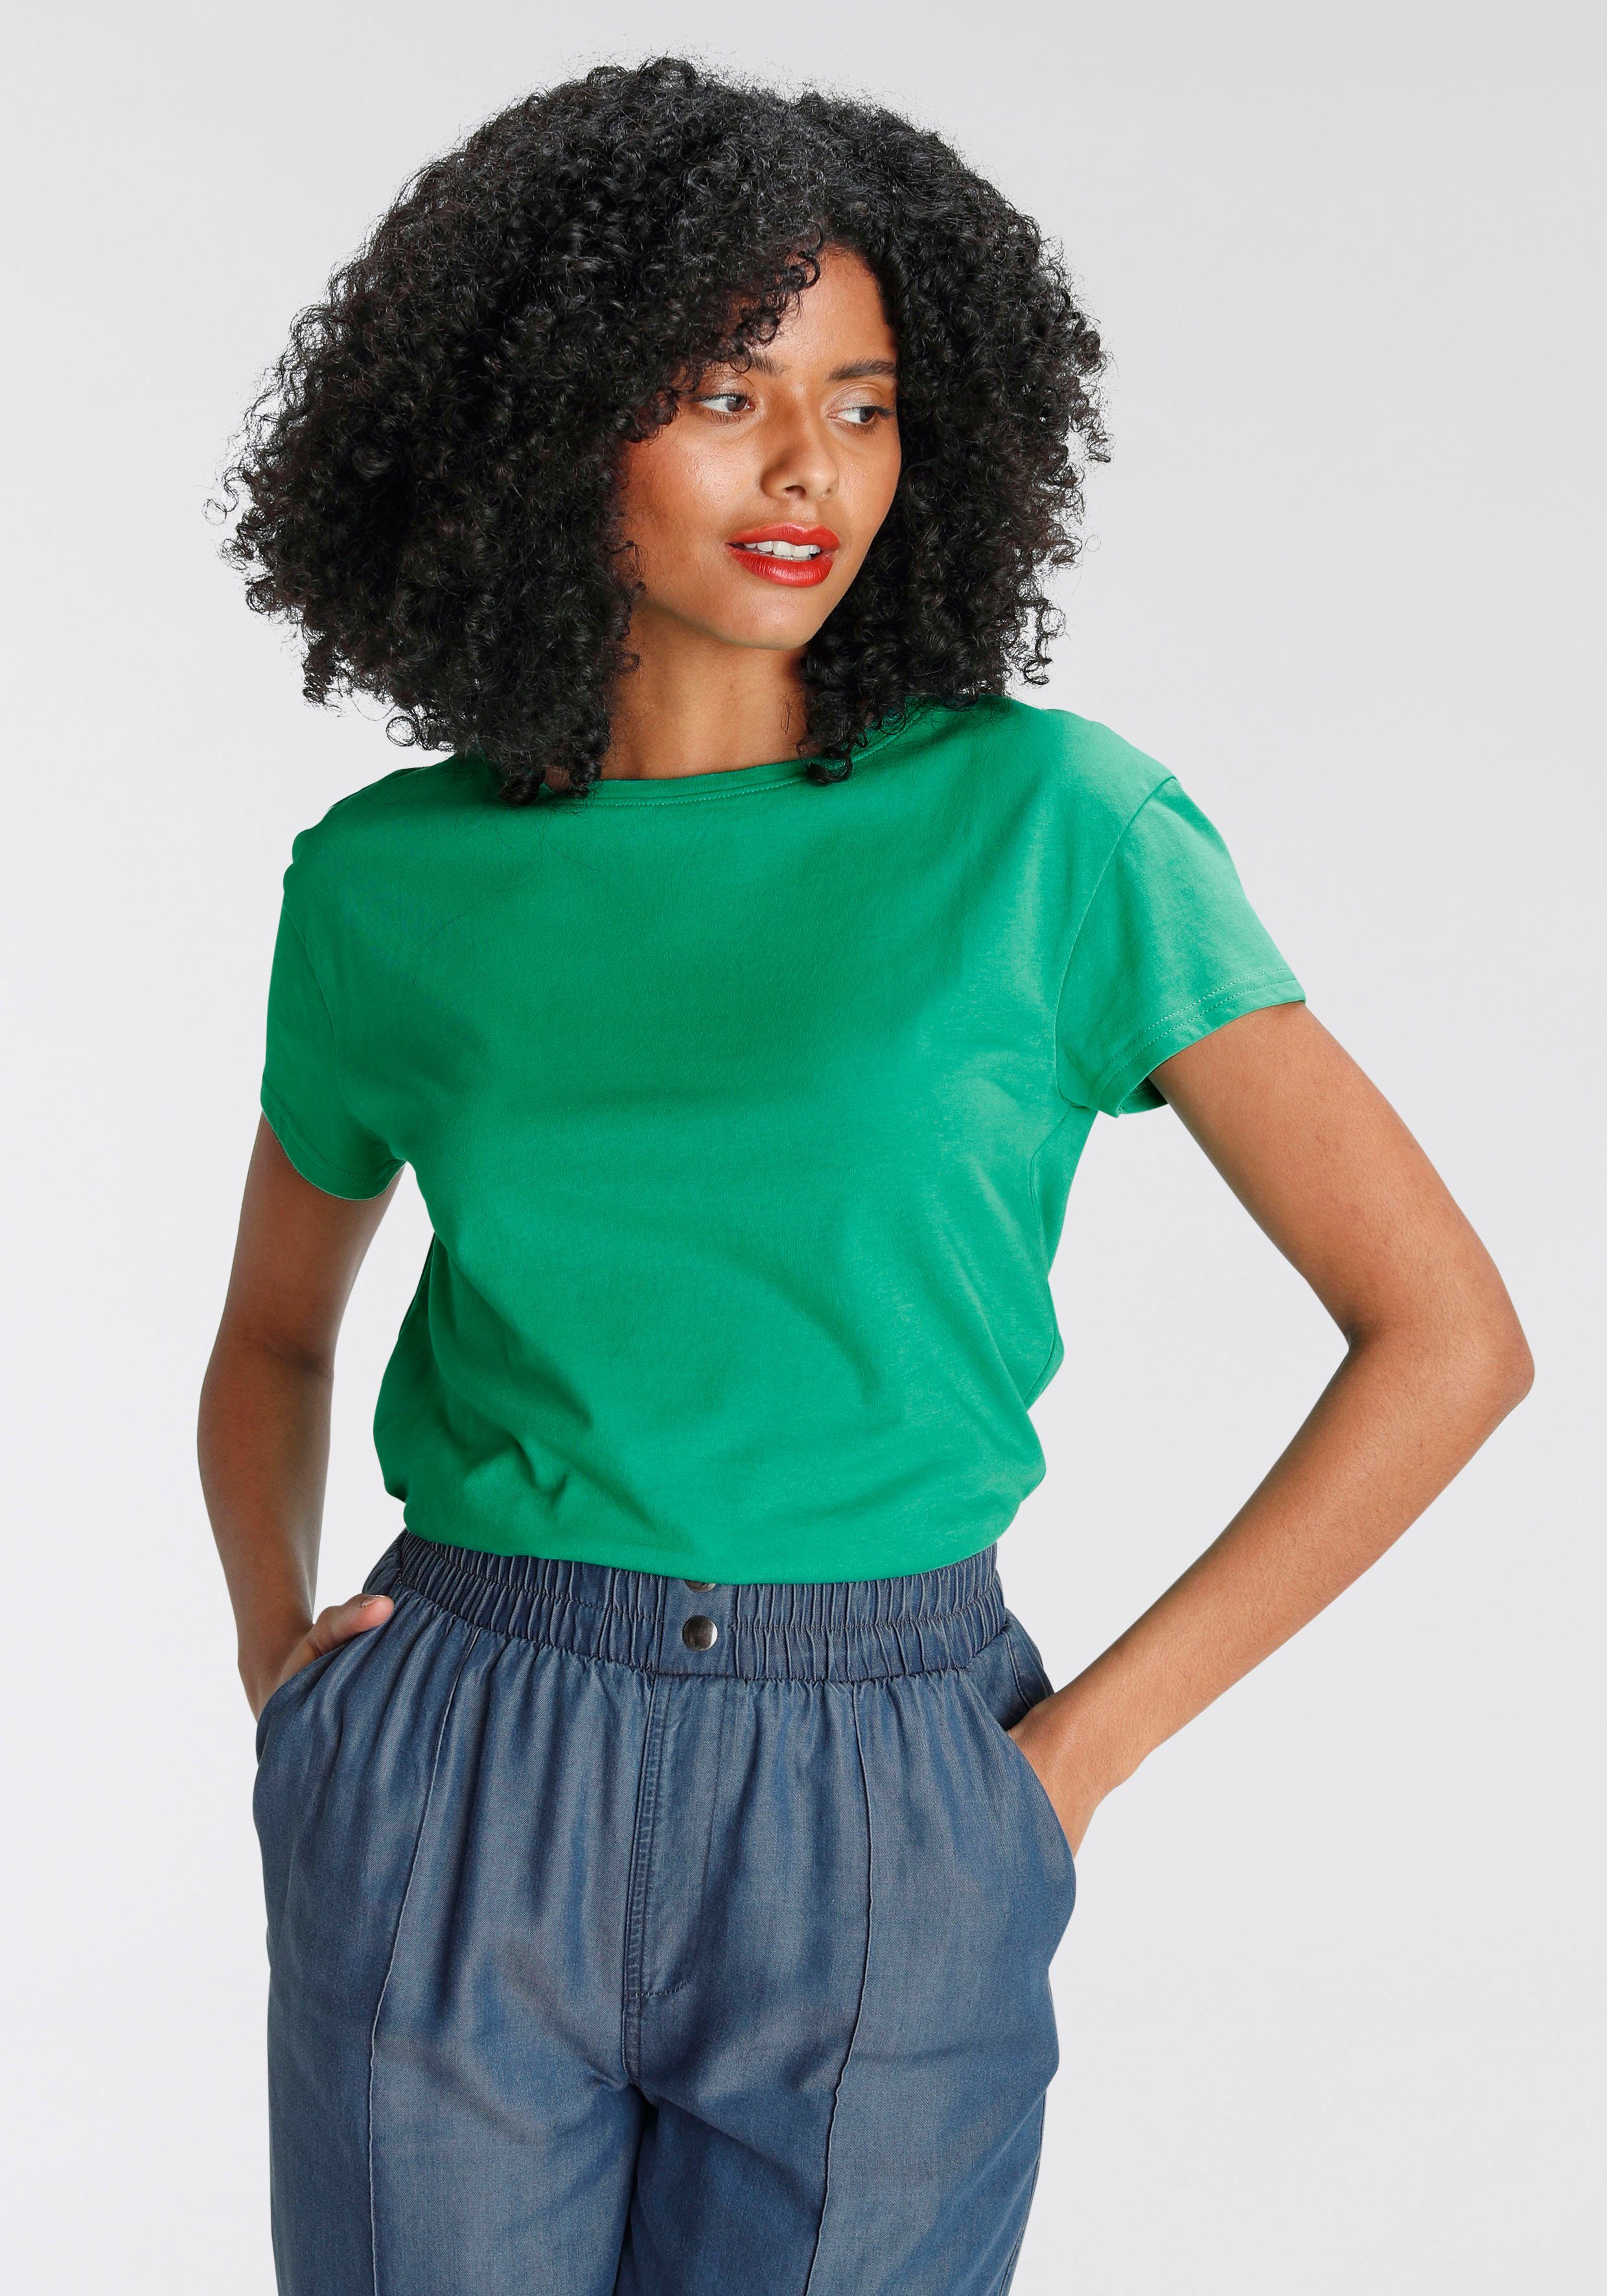 KOLLEKTION - T-Shirt im AJC Oversized-Look NEUE trendigen grün